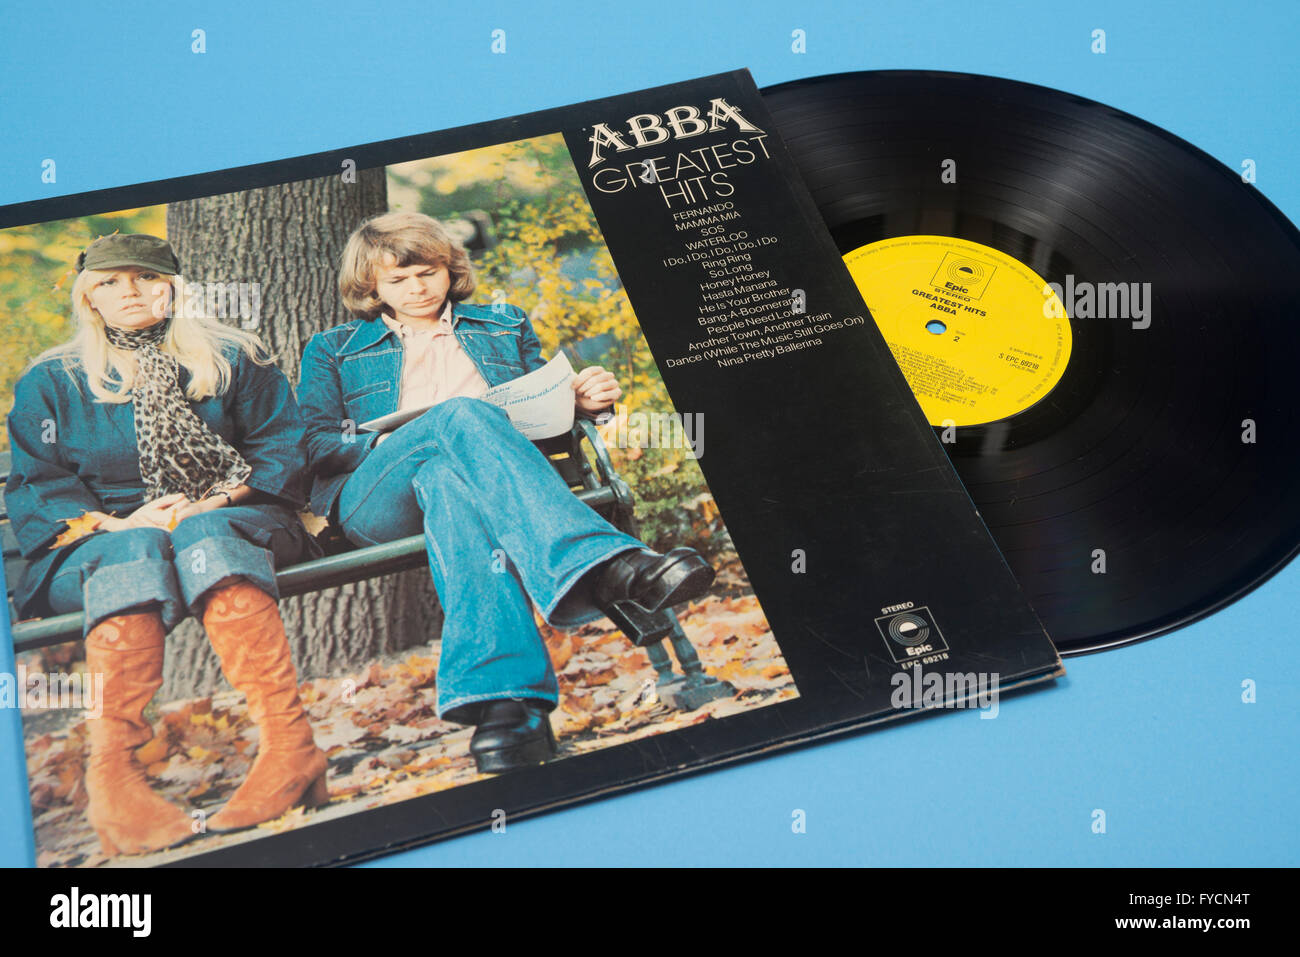 Álbum Greatest Hits en vinilo por Abba con manguito original artwork Foto de stock